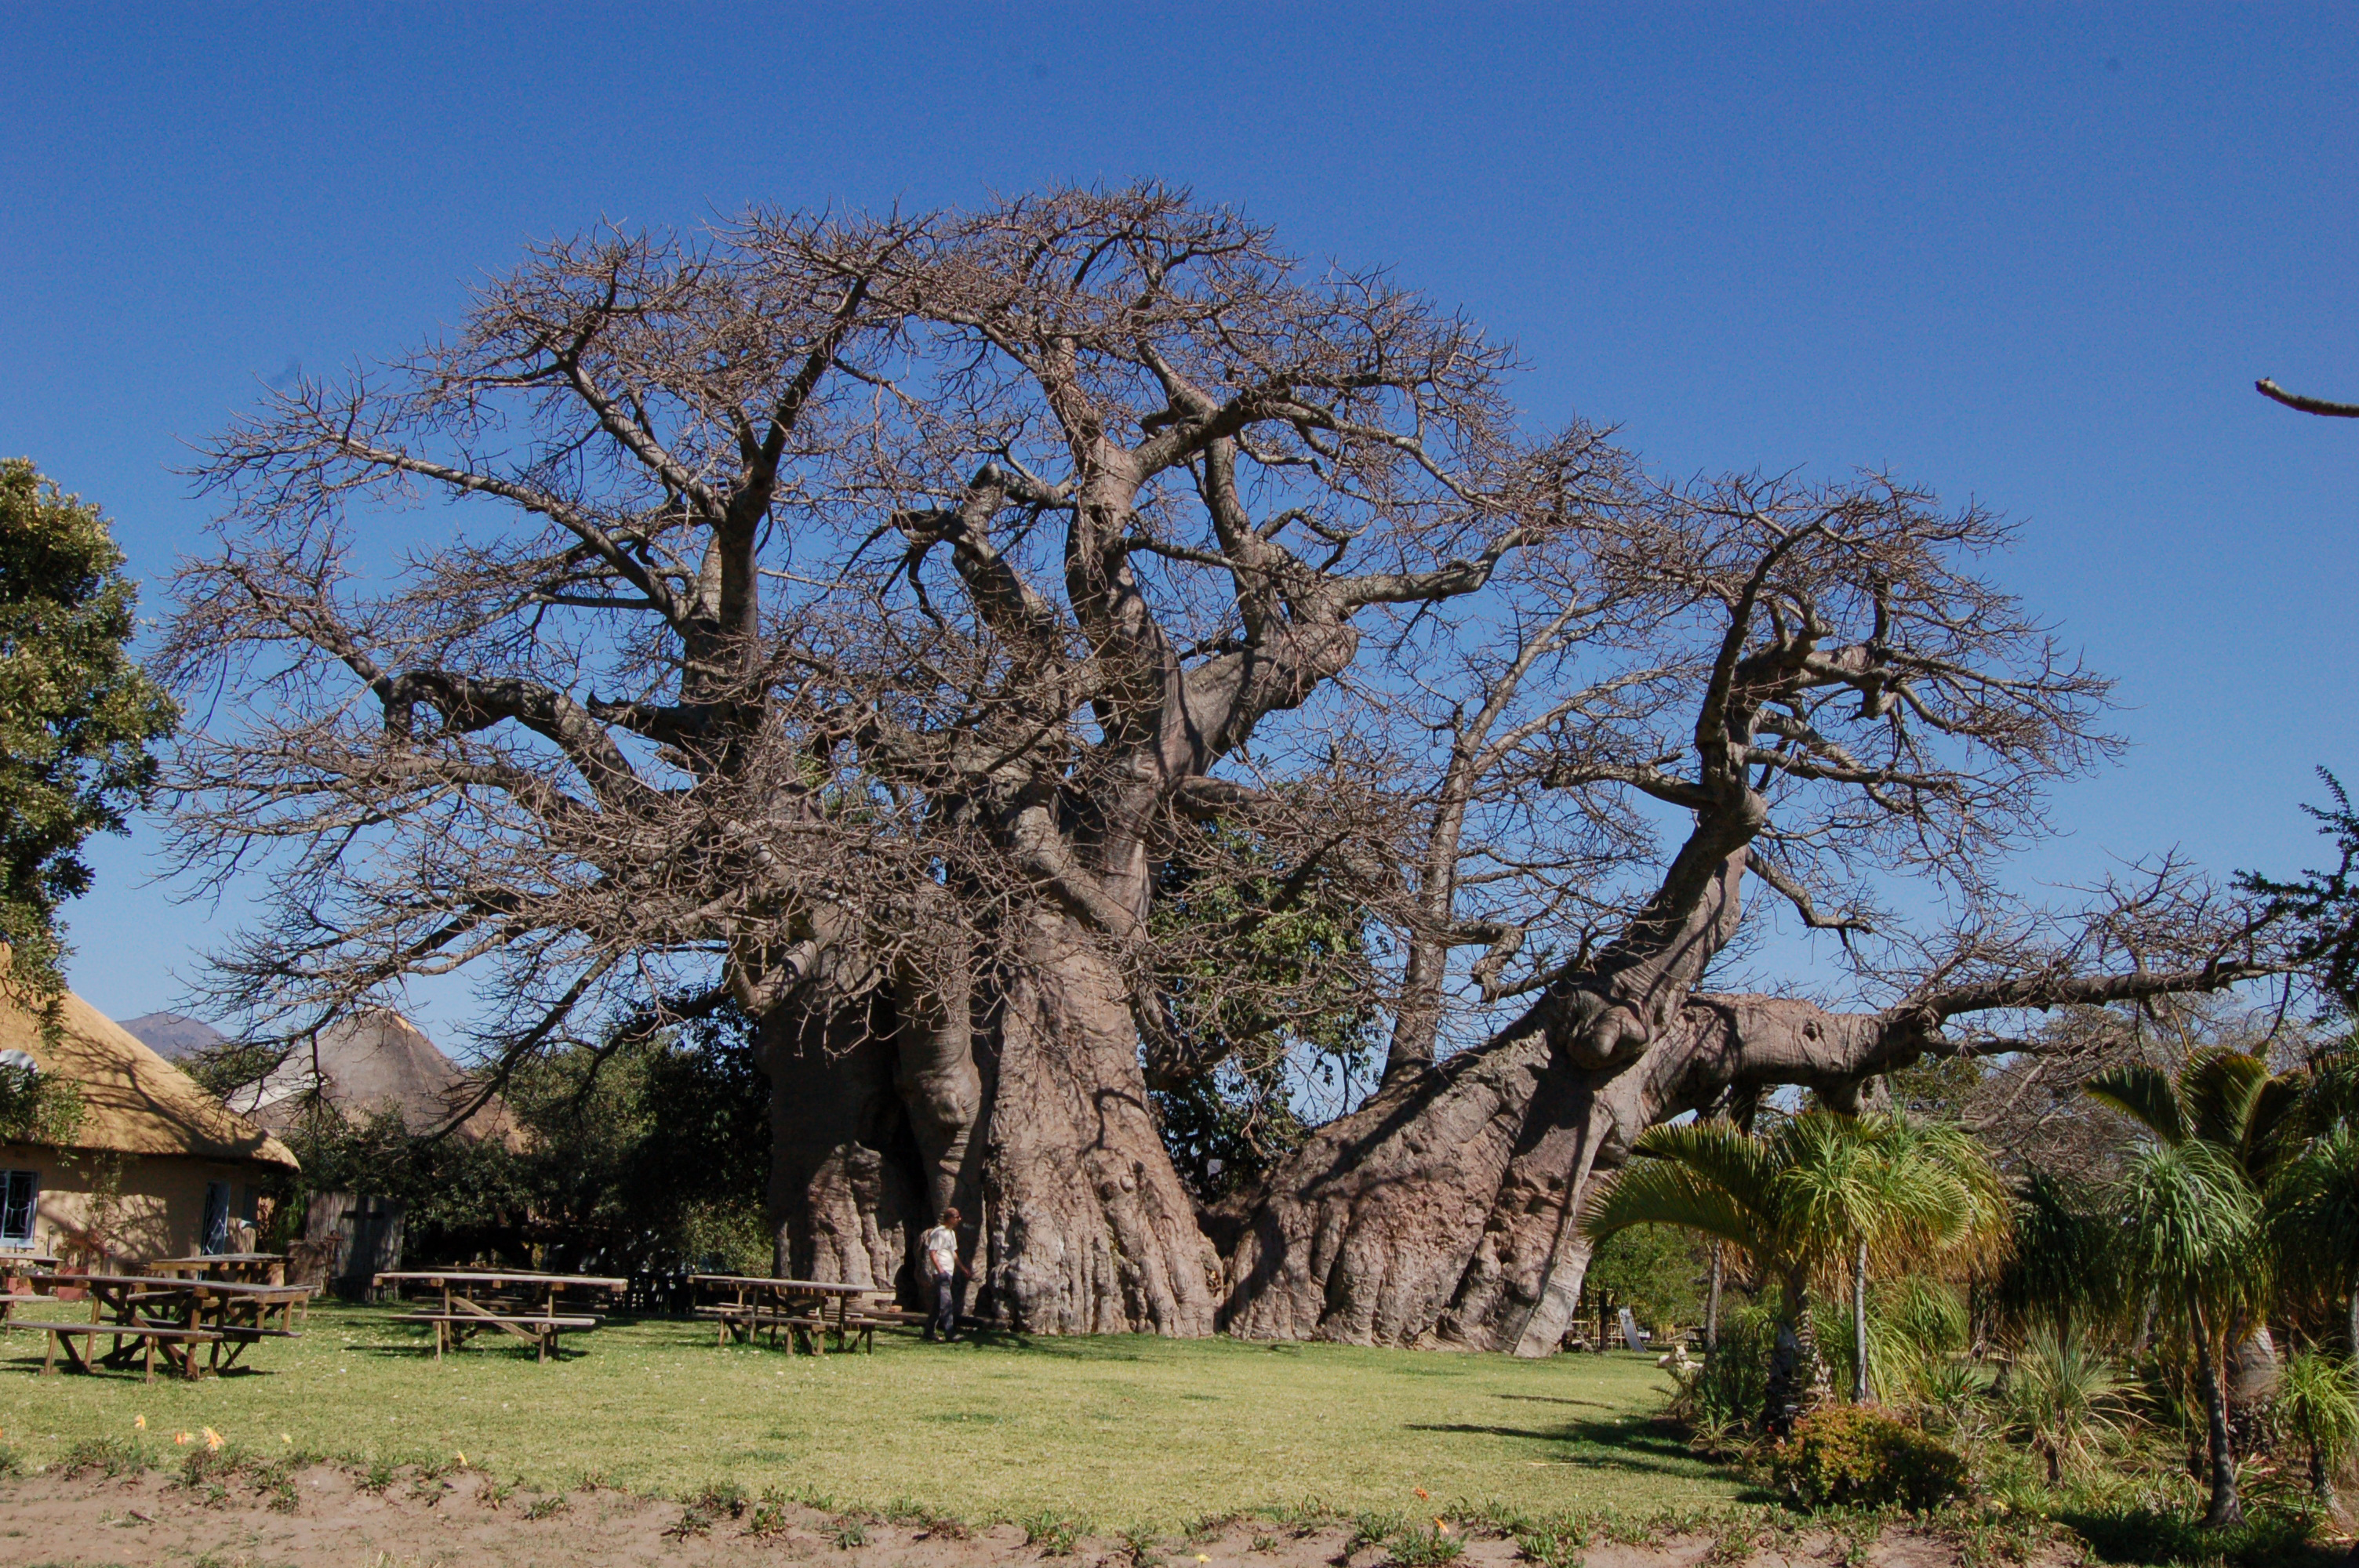 Ба баб. Баобаб Санлэнд. Баобаб (Адансония пальчатая. Баобаб в Африке. Дерево в Африке баобаб.